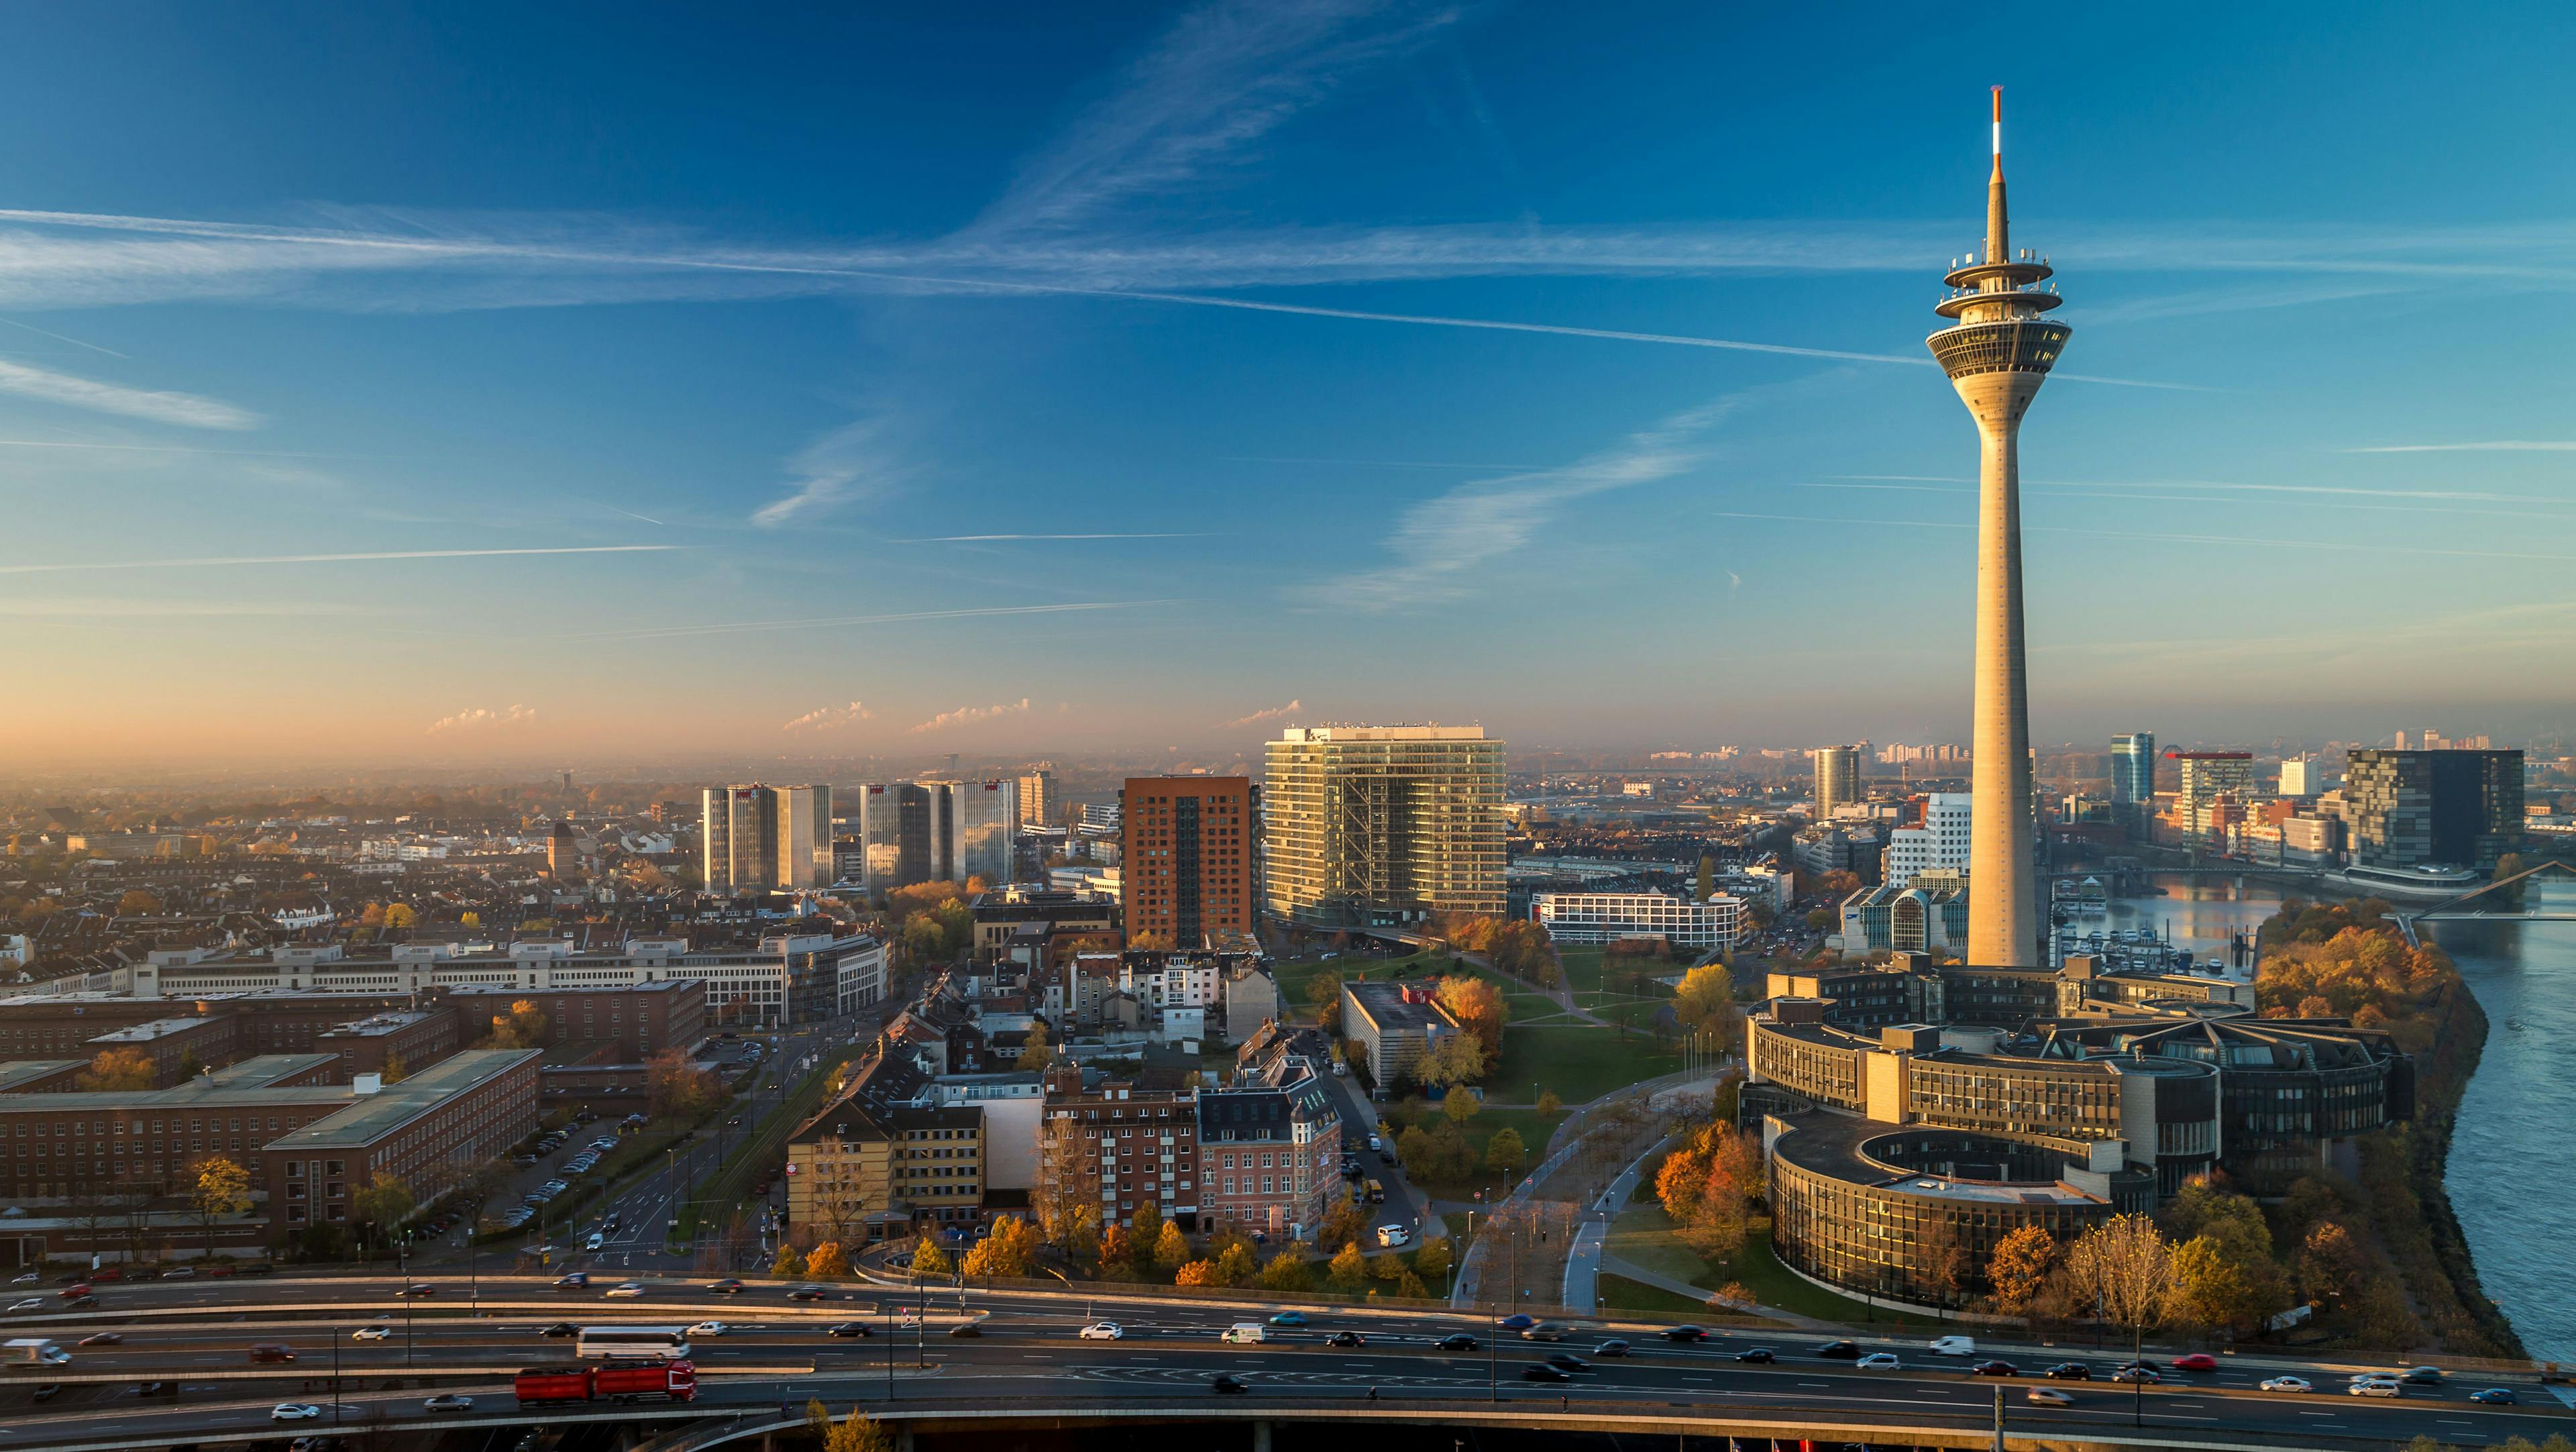 Fernsehturm Düsseldorf | Image Credit: © Dancingdice - stock.adobe.com